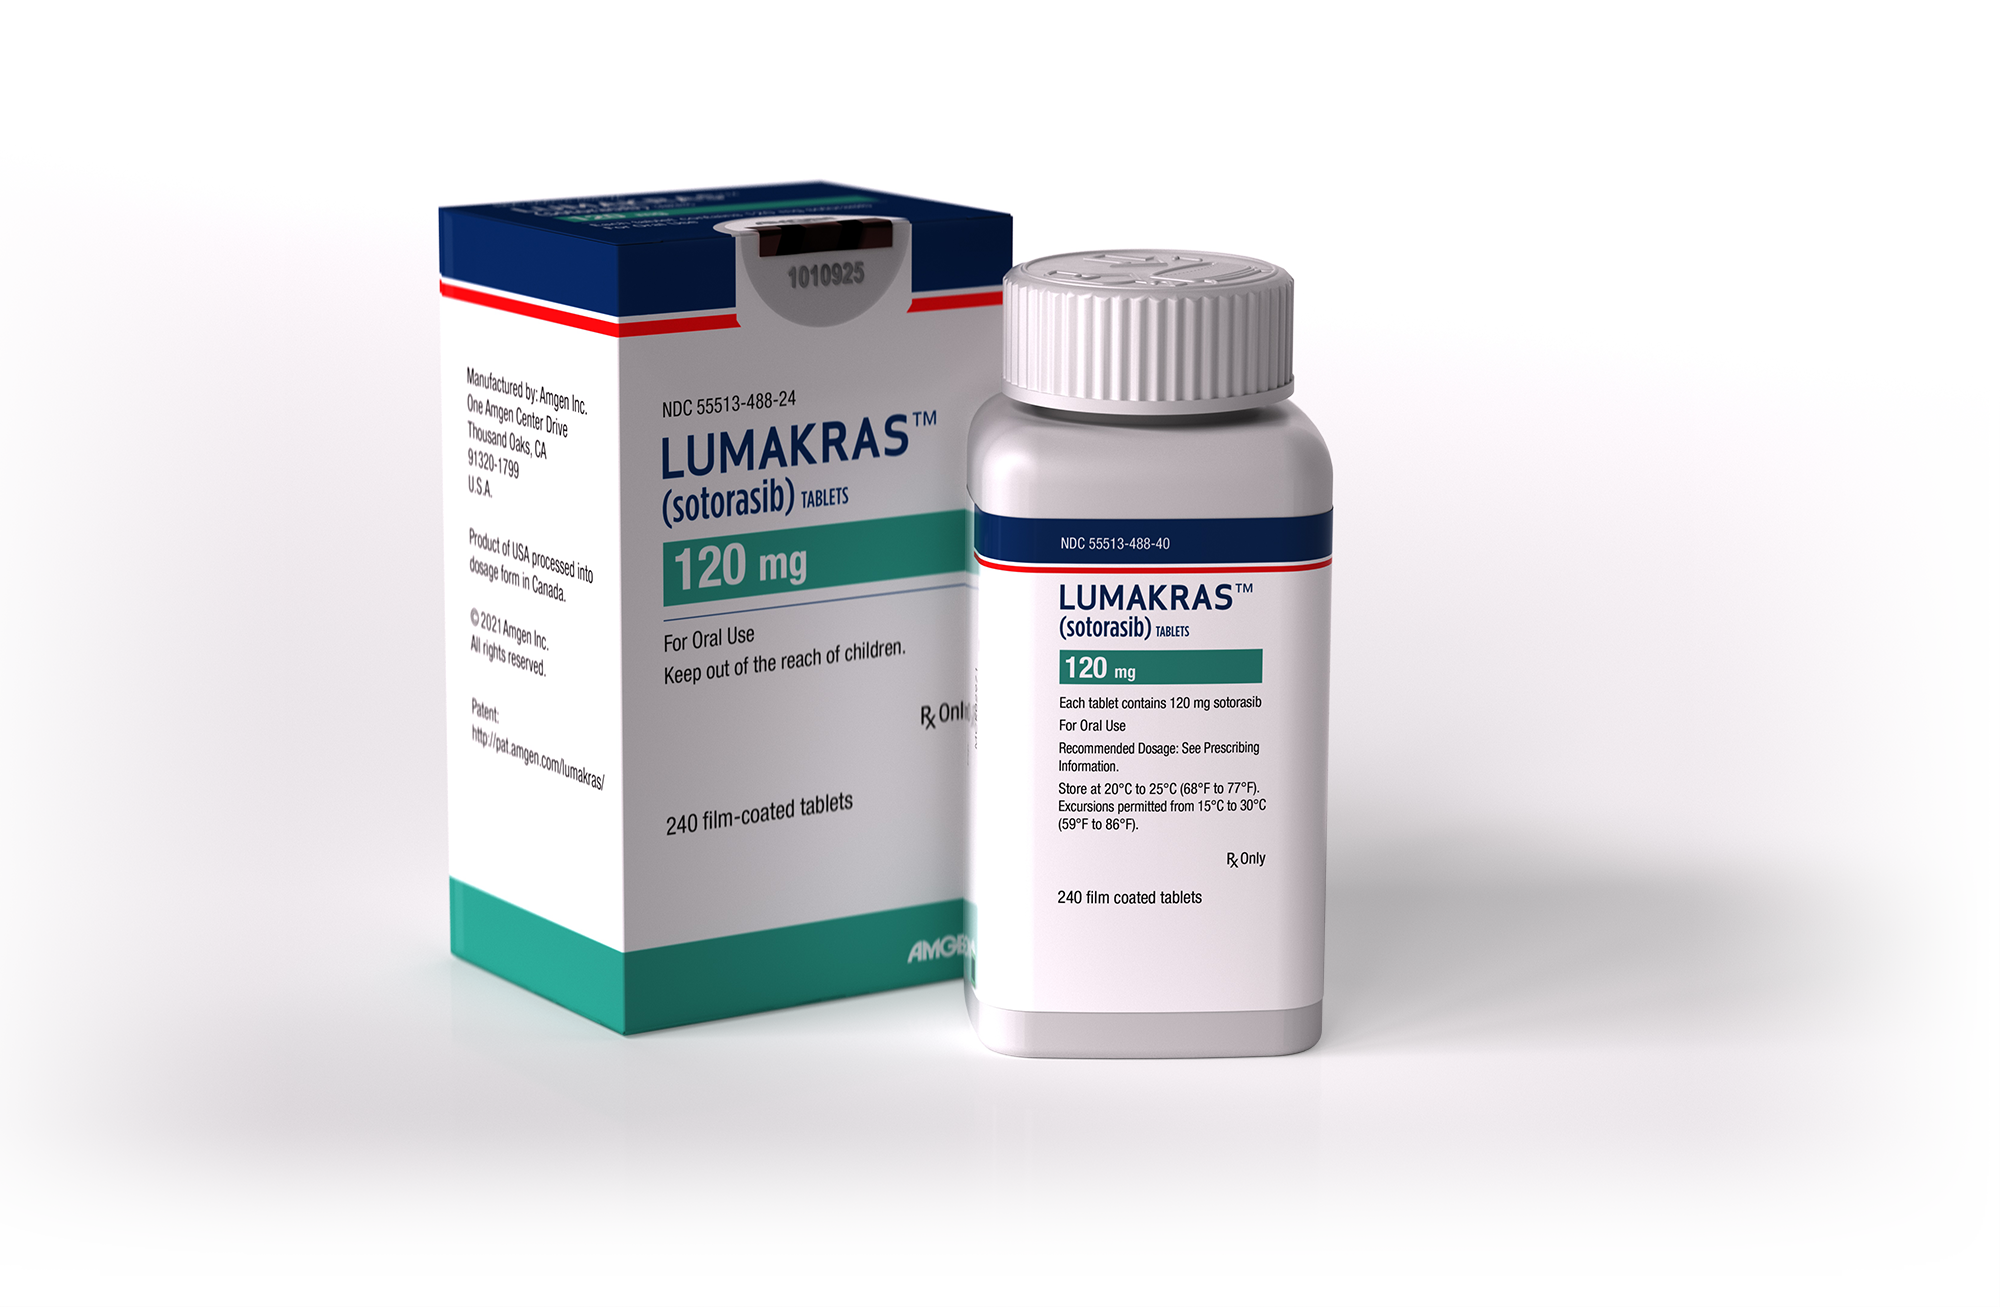 Box and bottle of Lumakras KRAS cancer drug from Amgen